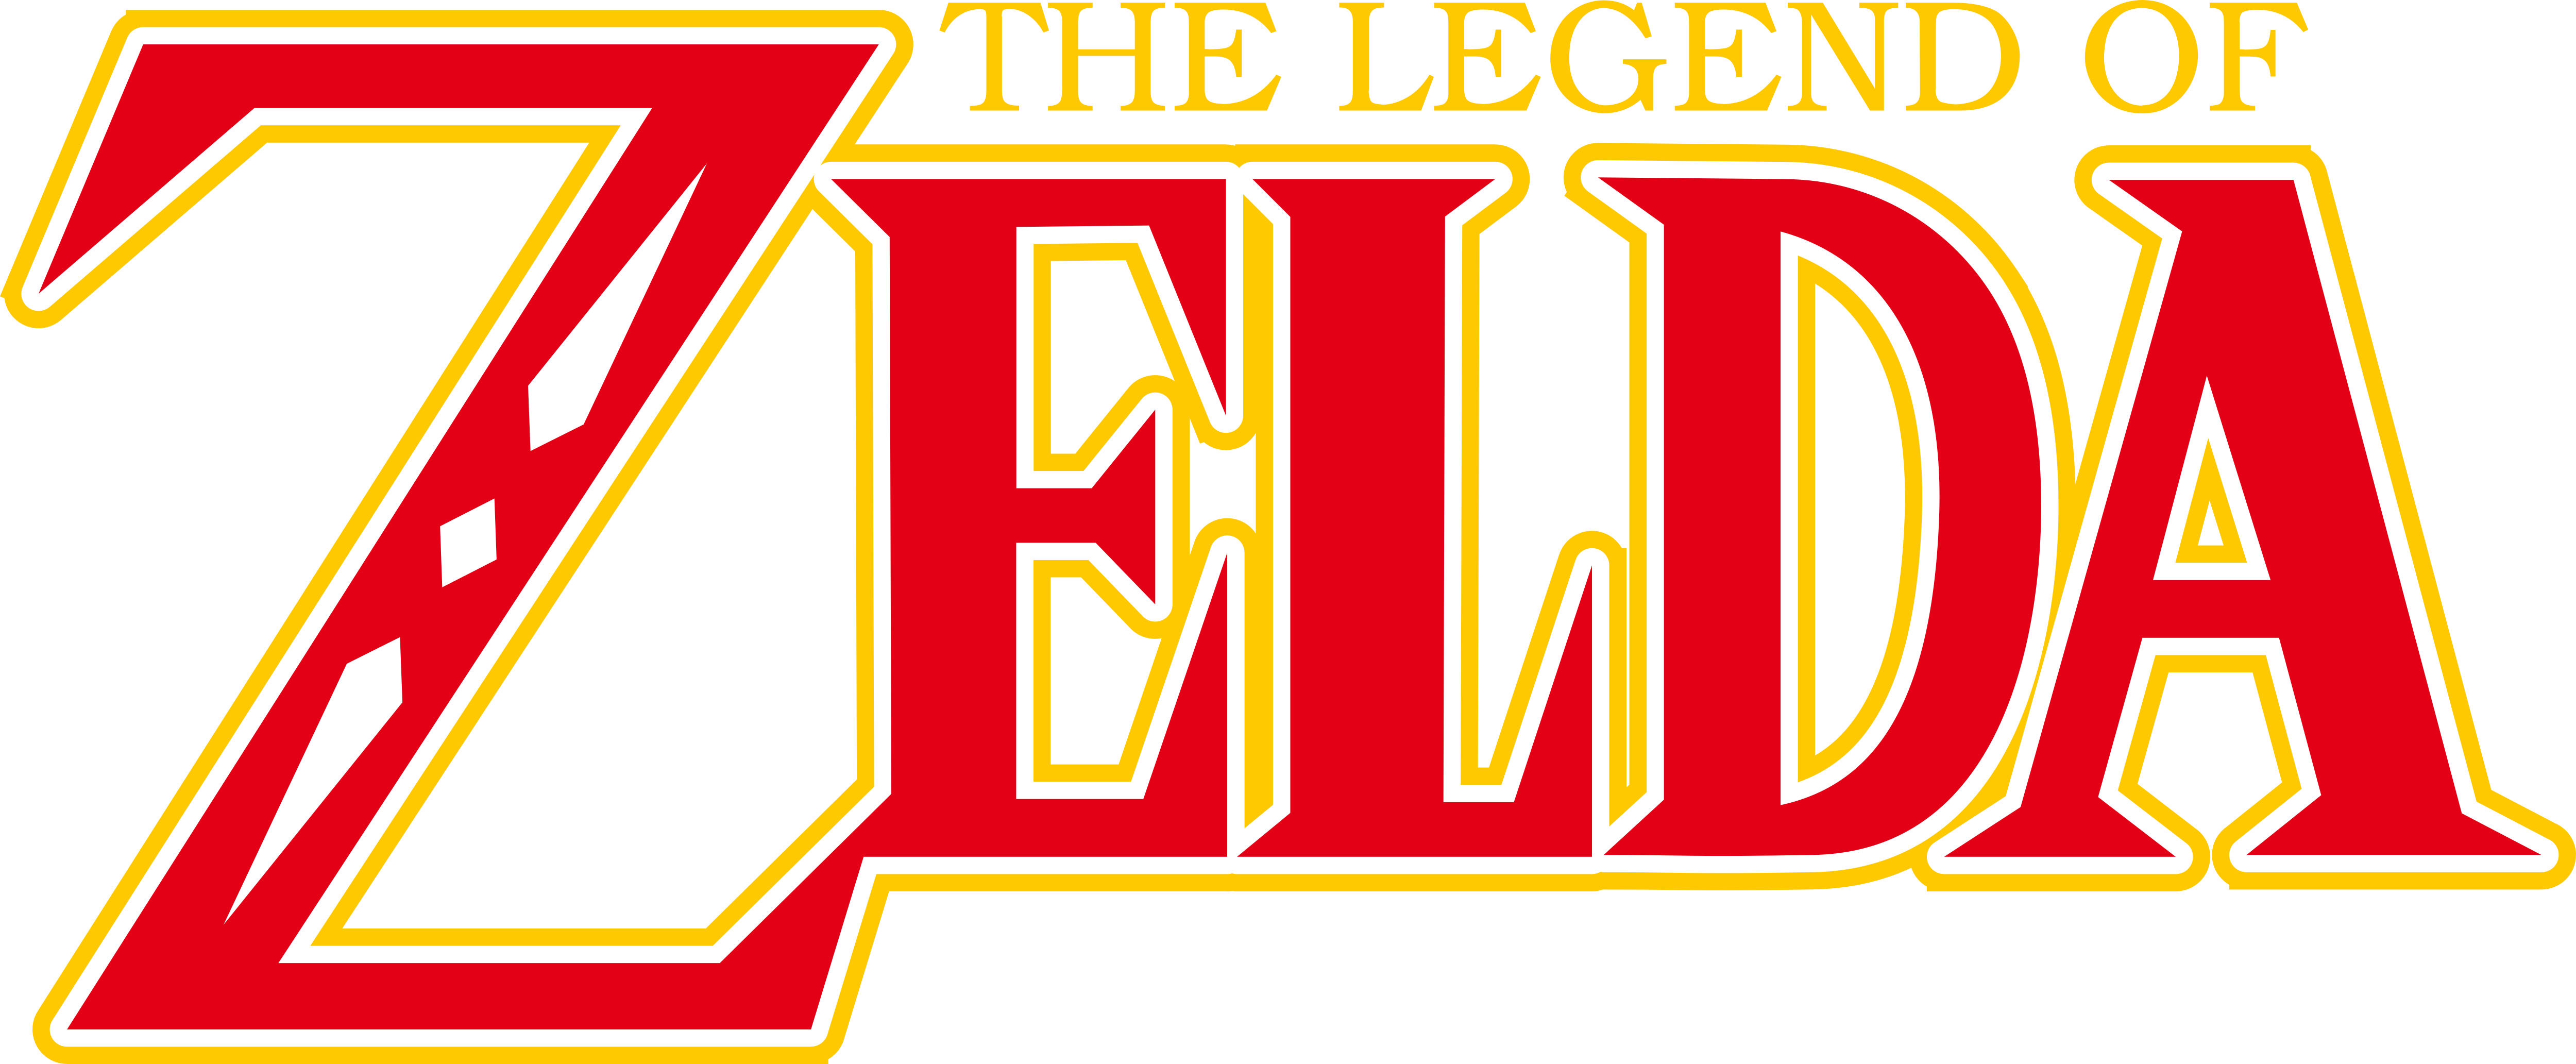 Legend Of Zelda Twilight Princess Logo